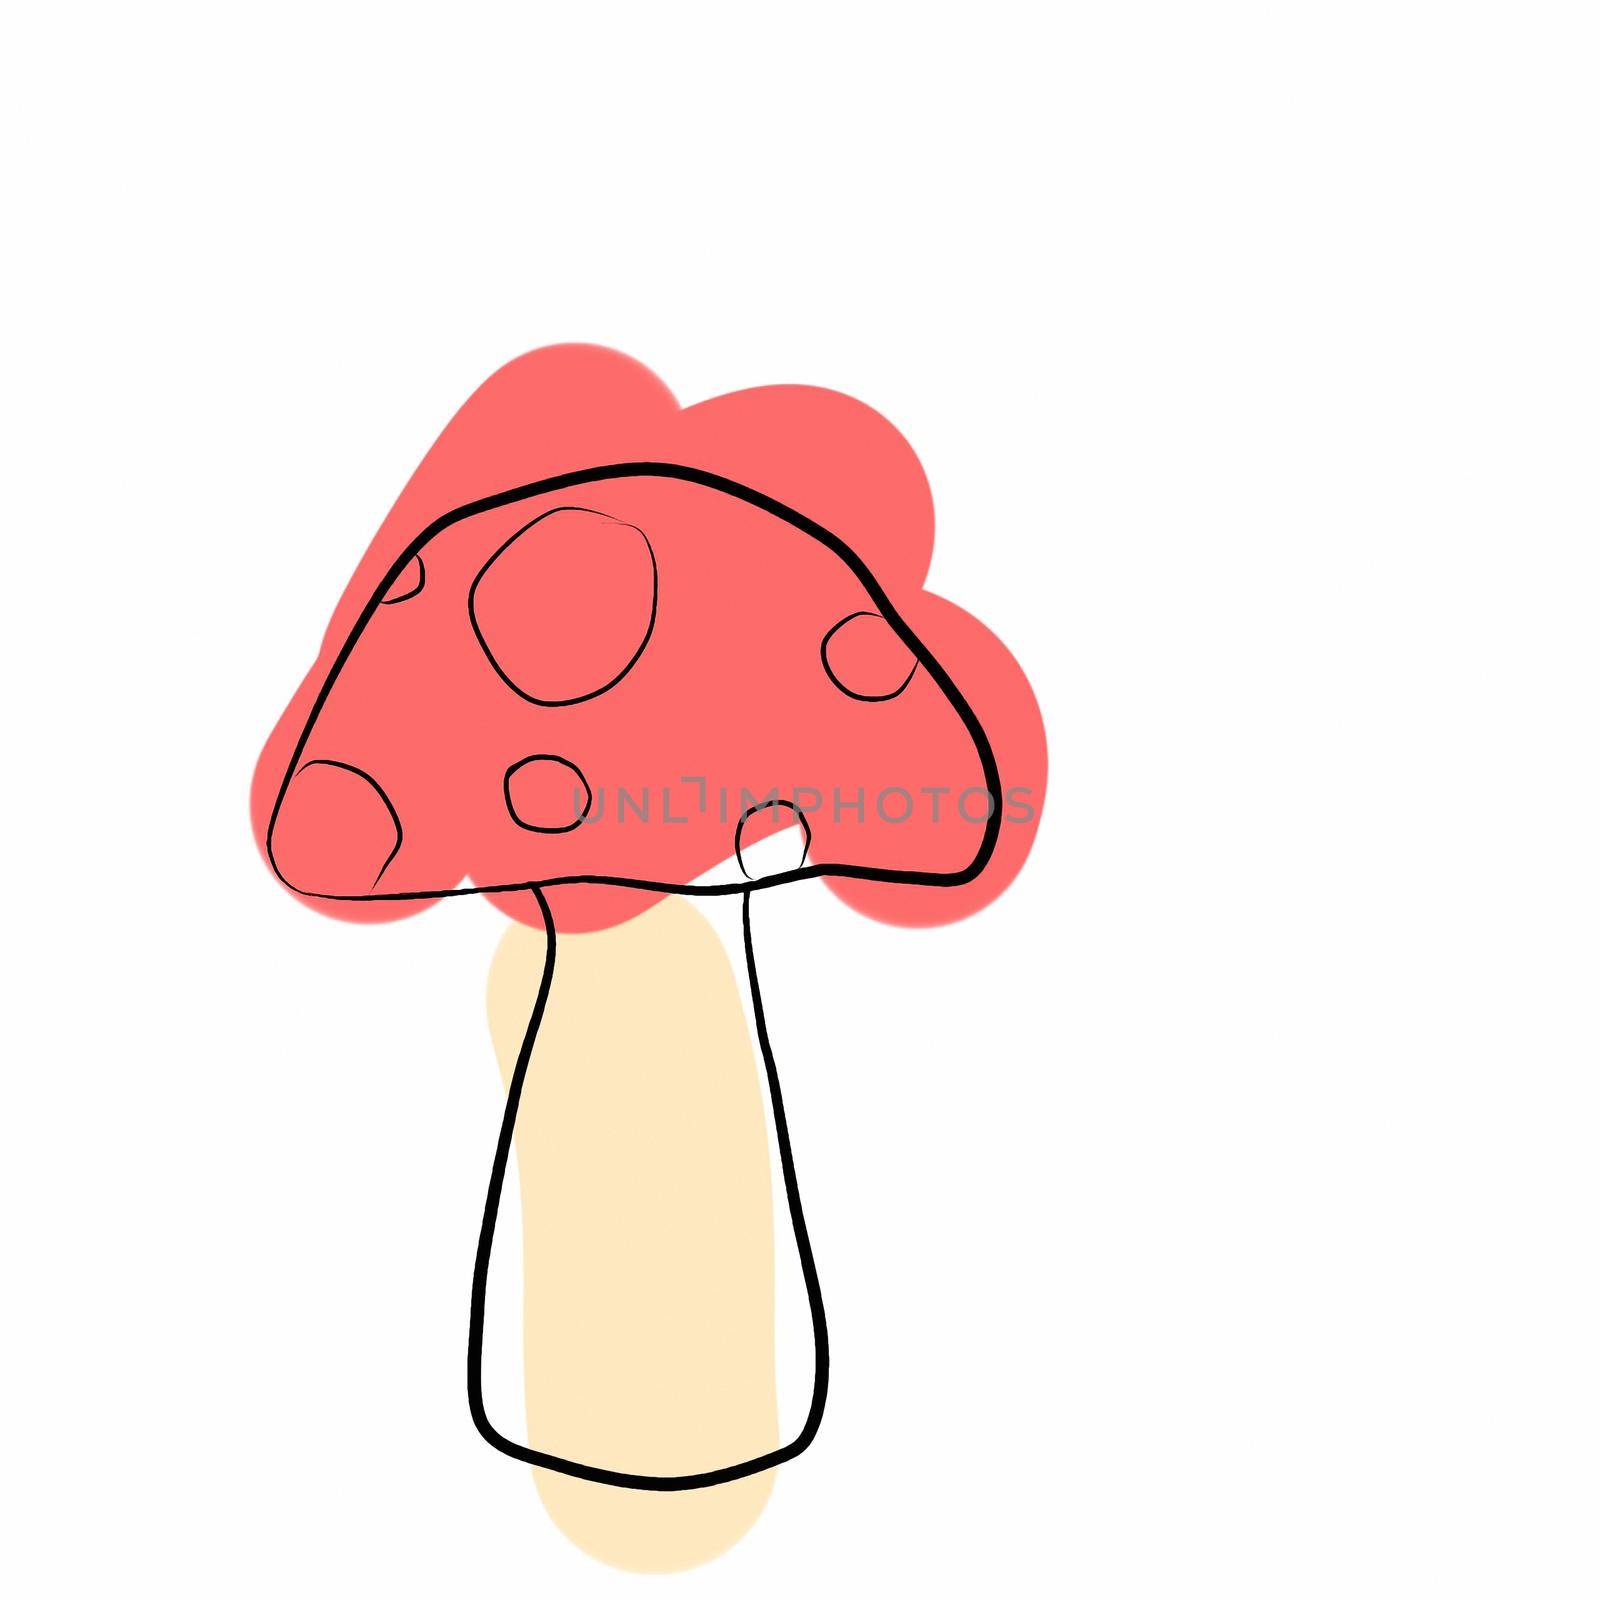 Non-toxic cartoon red mushroom on white background image